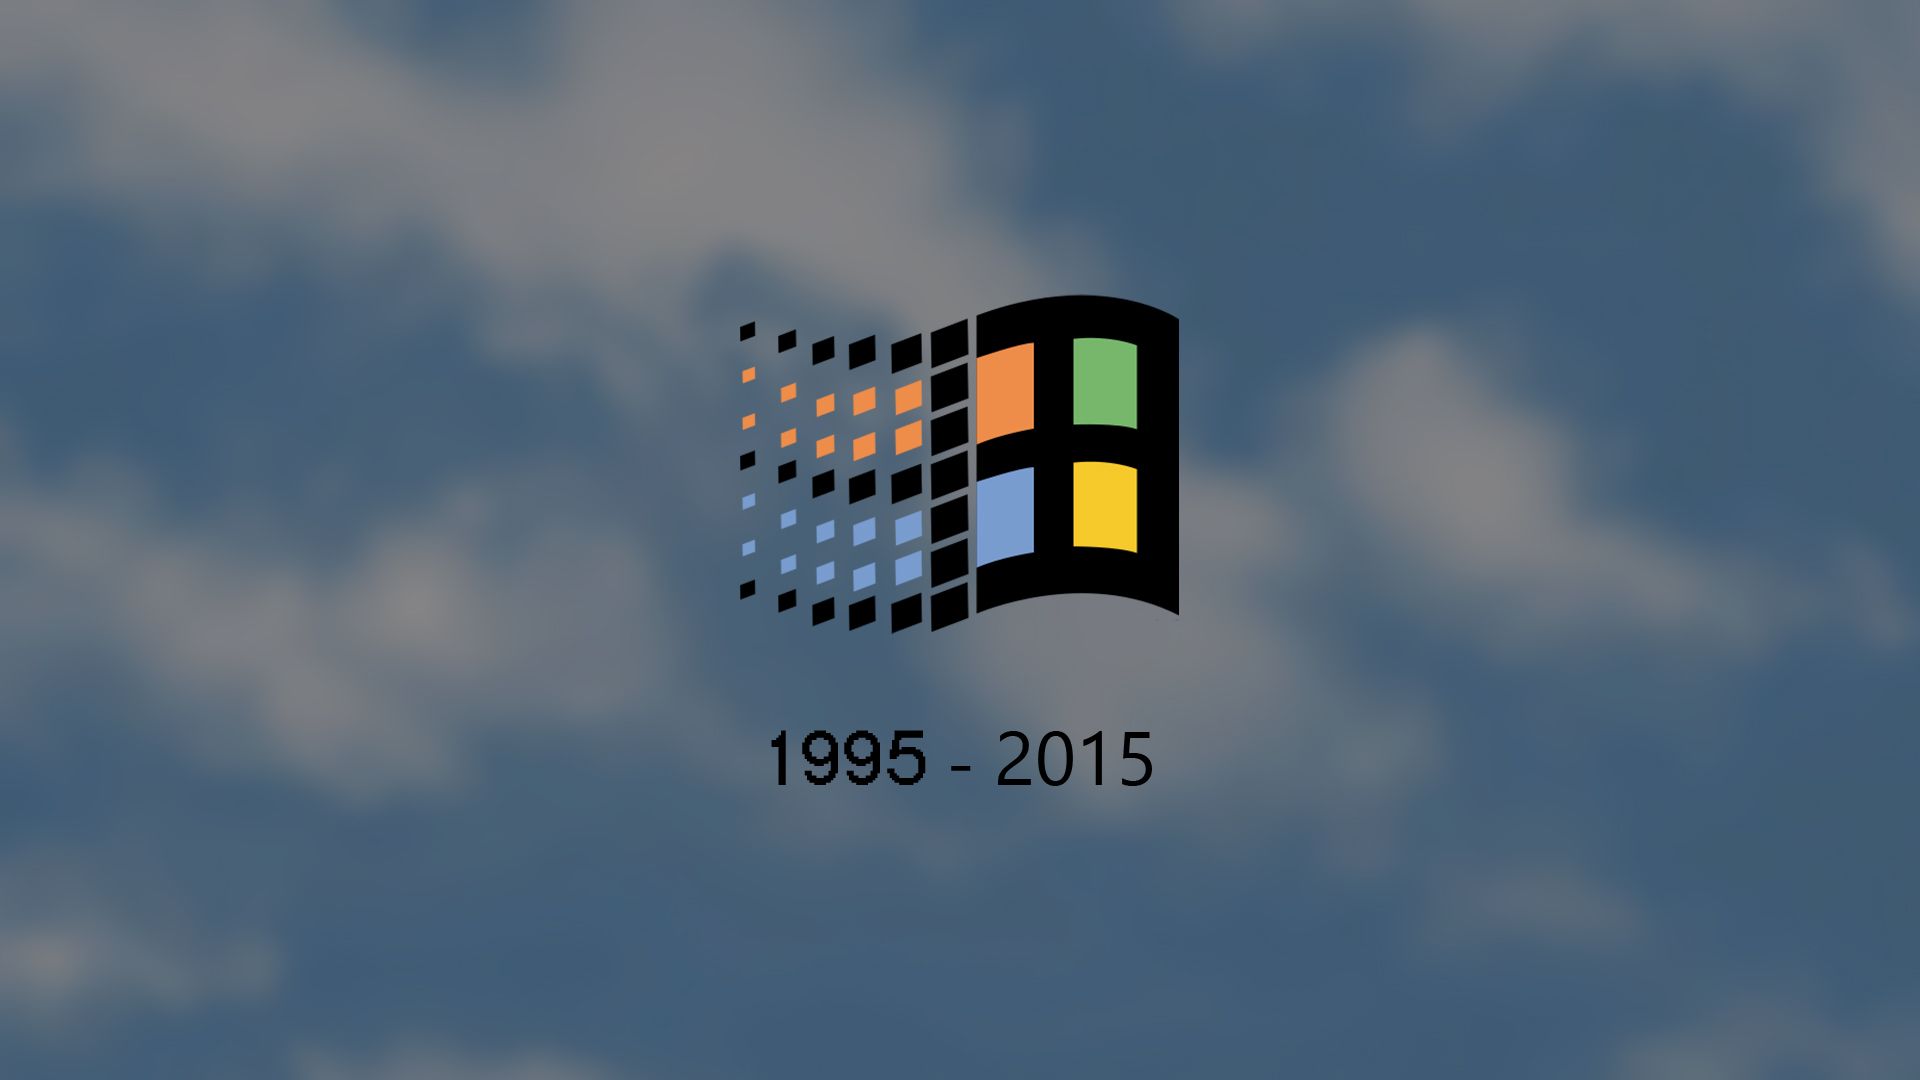 A windows 95 logo on the sky - Windows 95, Windows 98